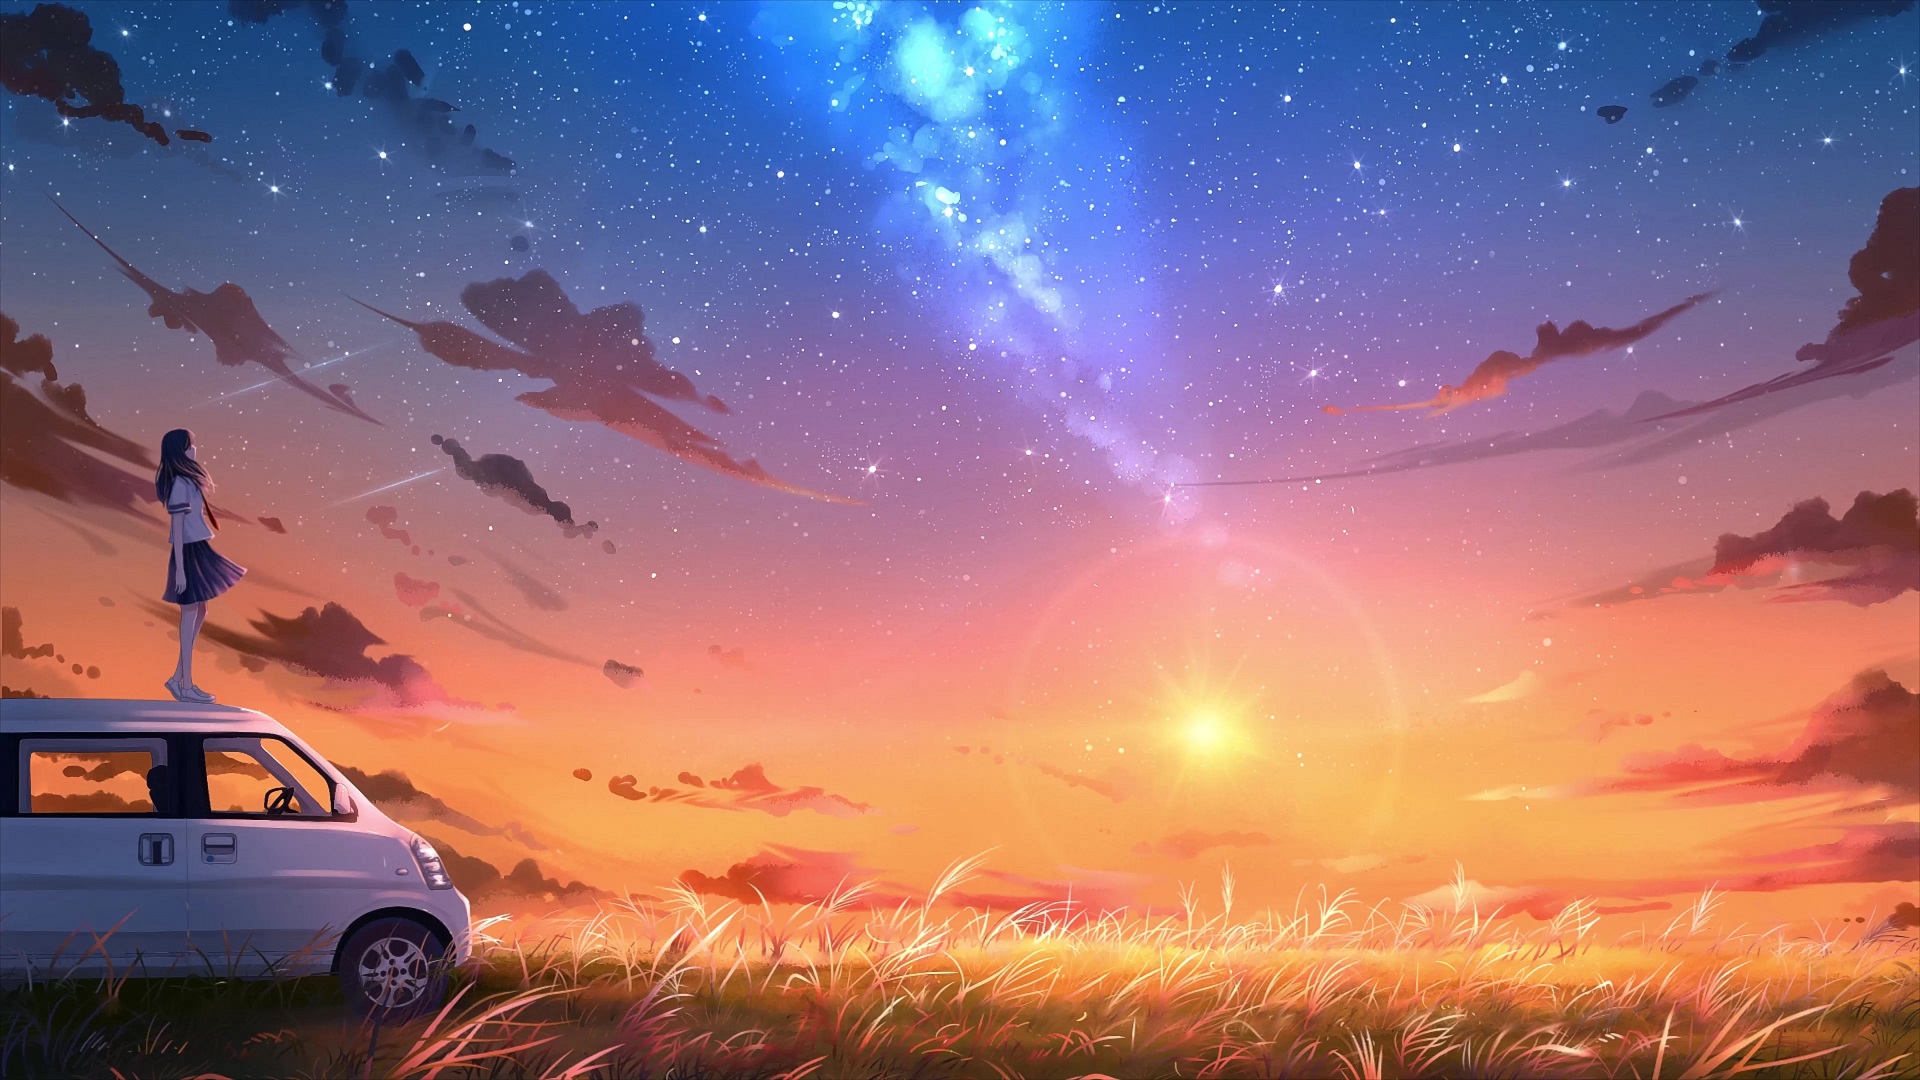 Anime School Girl Looking At The Aurora Sunset Sky Live Wallpaper - MoeWalls